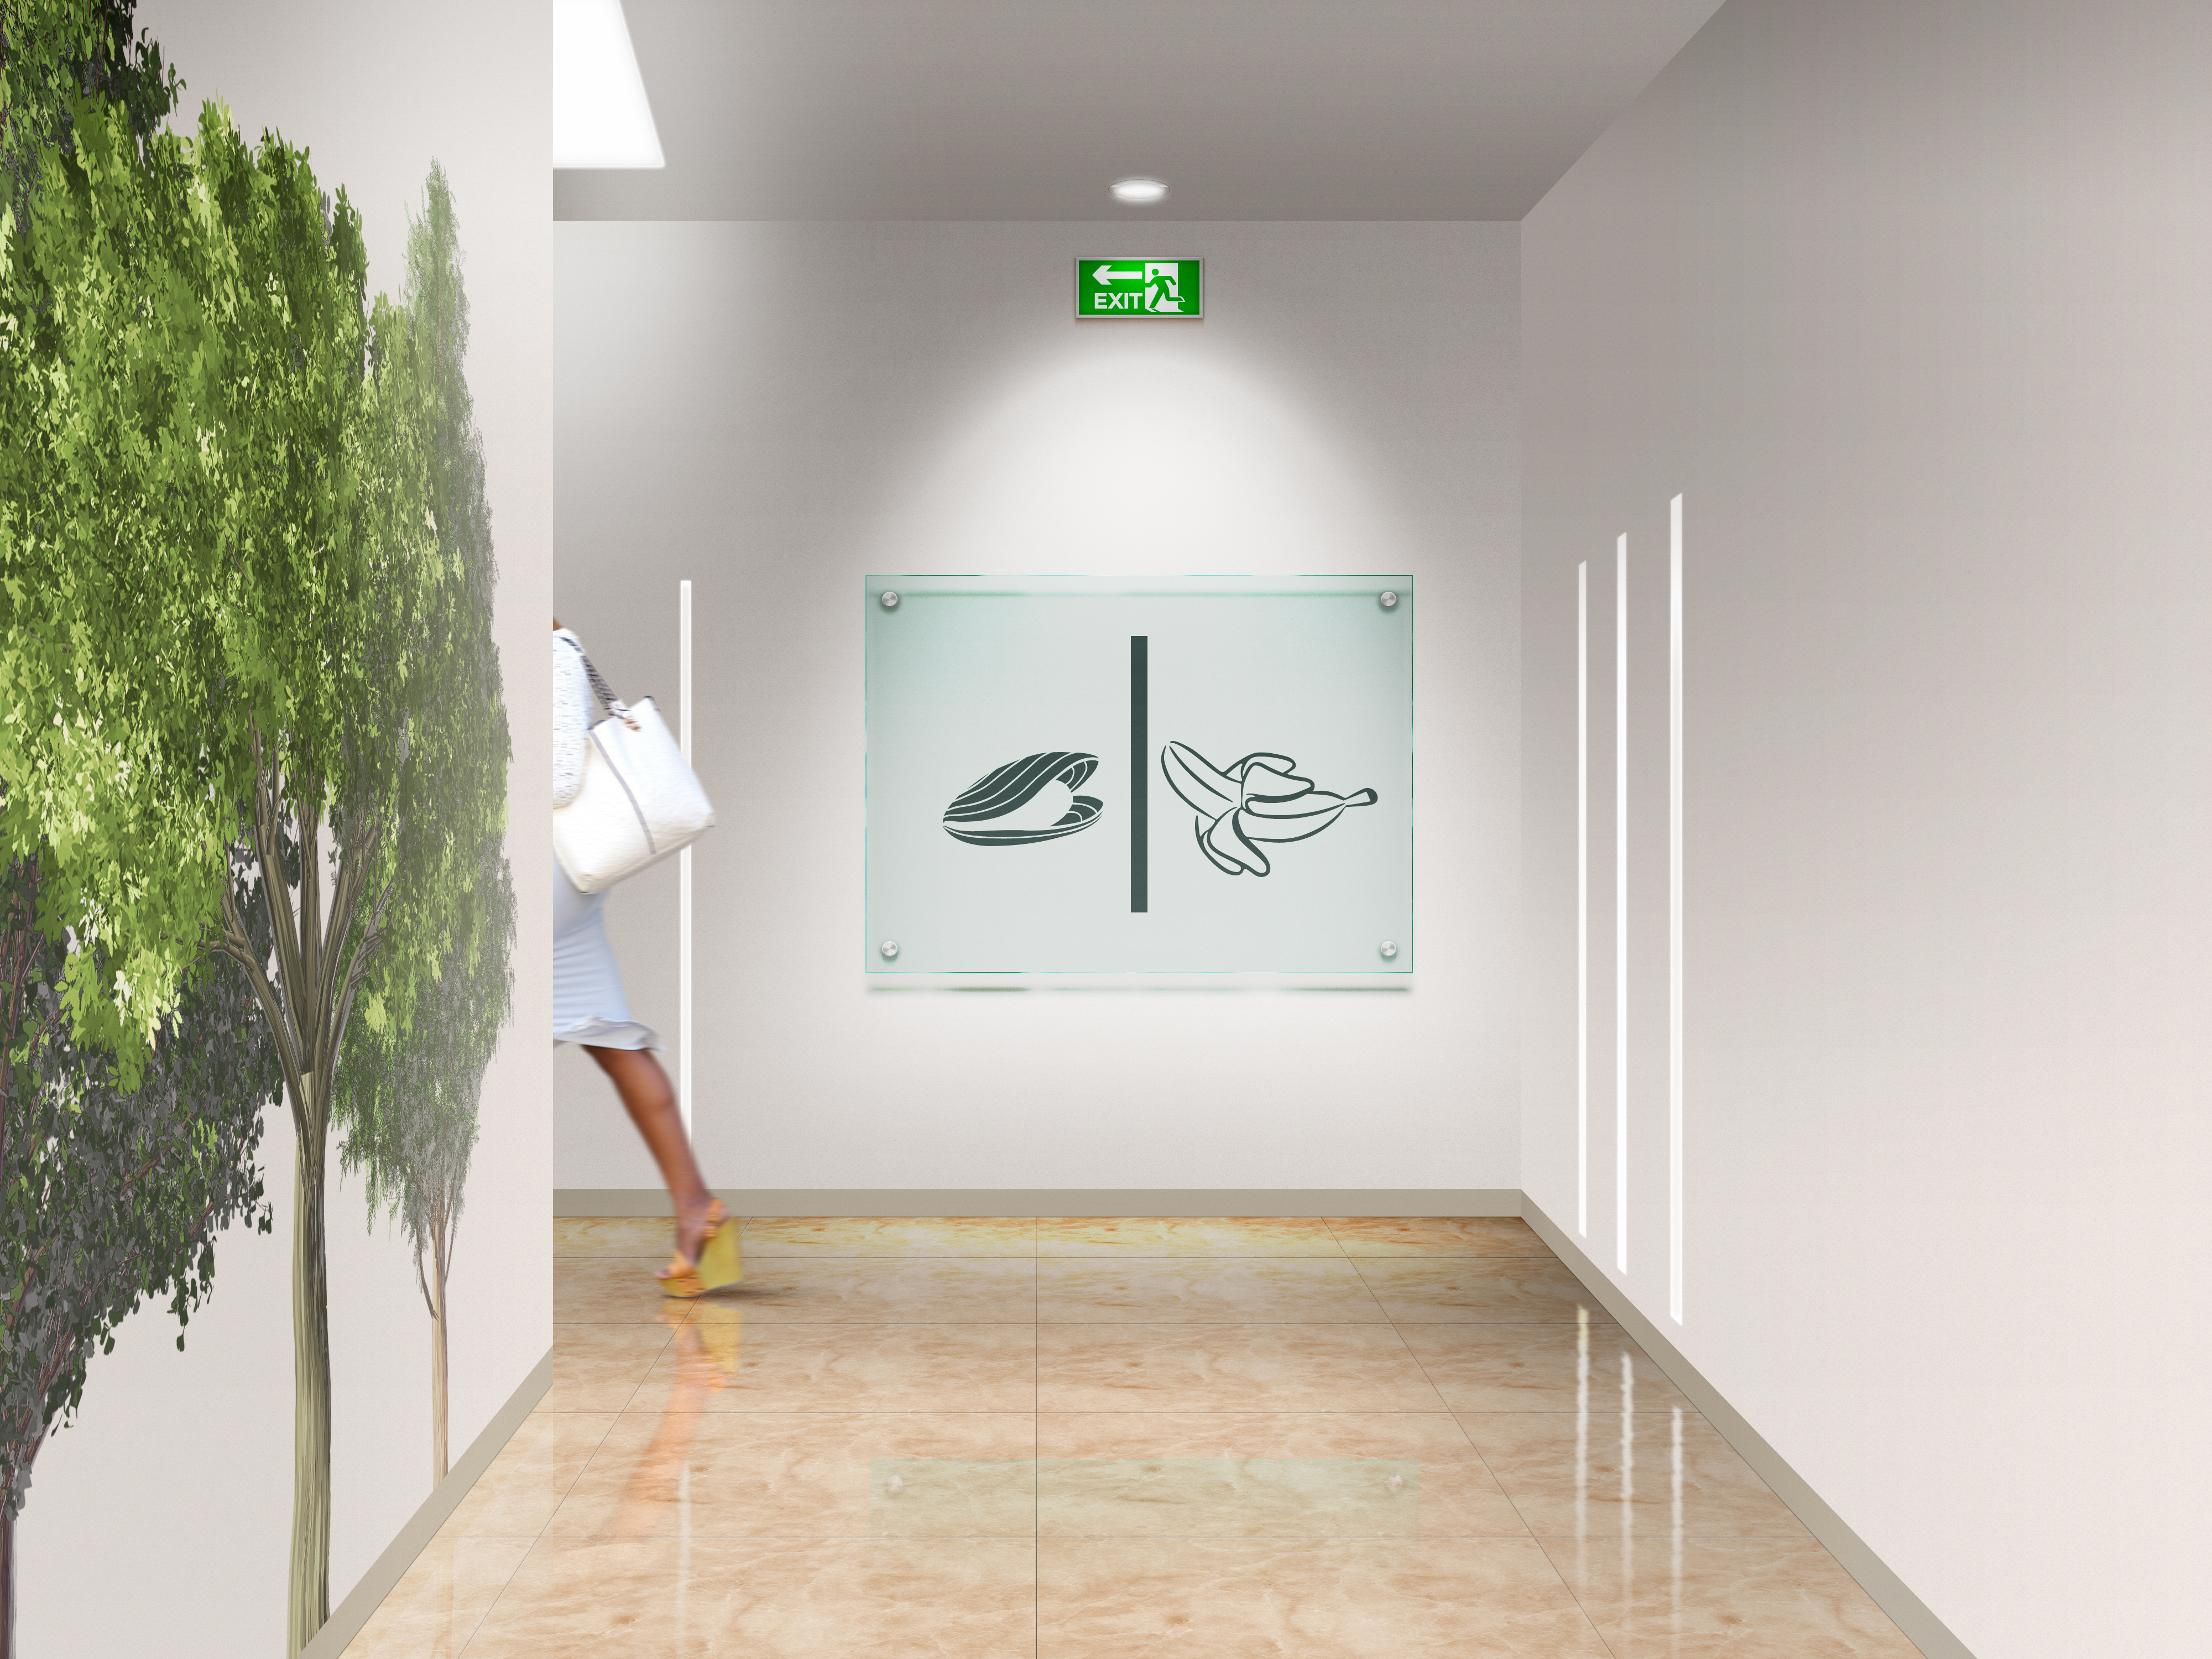 Public Restroom Signs Digital Art 4000x3000